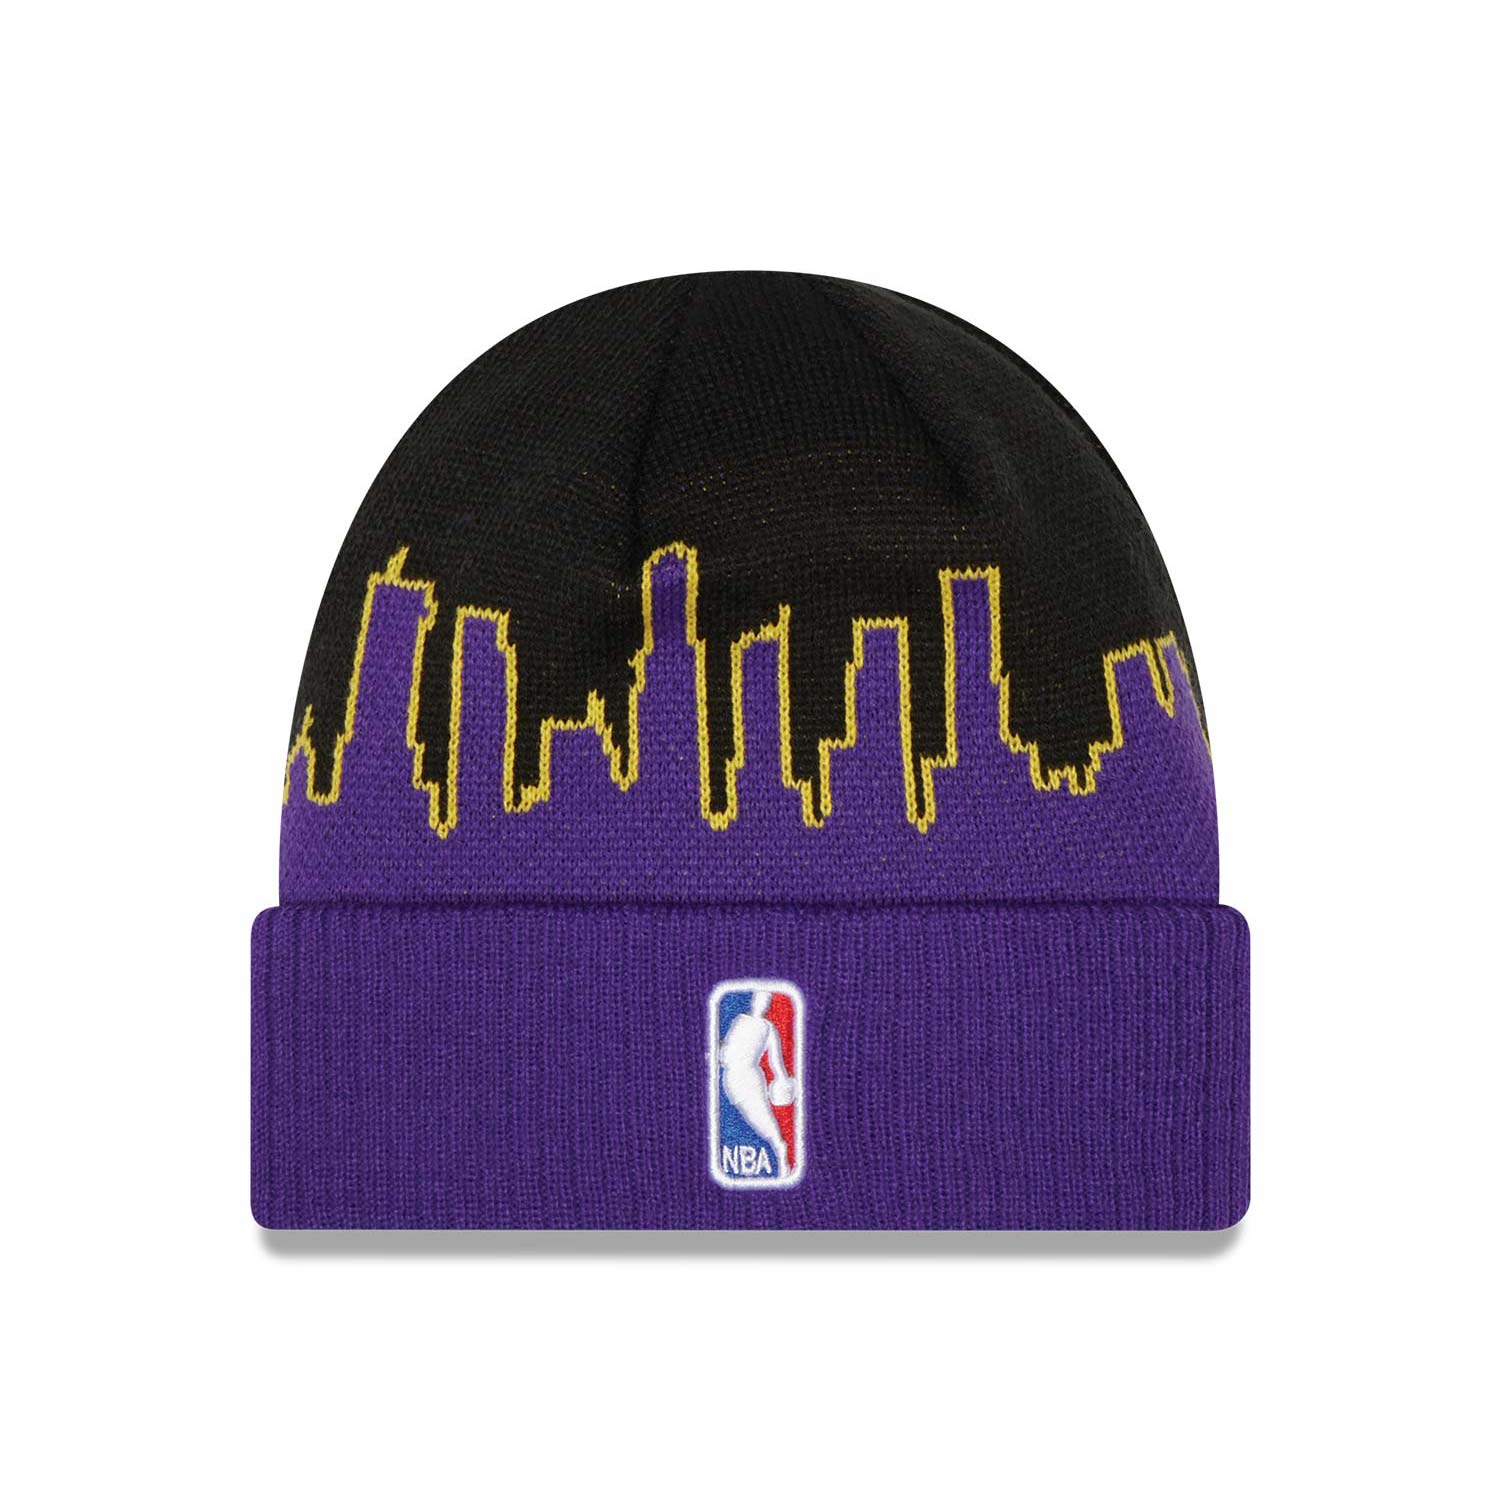 Official New Era NBA Tip Off LA Lakers Black Beanie Hat B9487_799 B9487